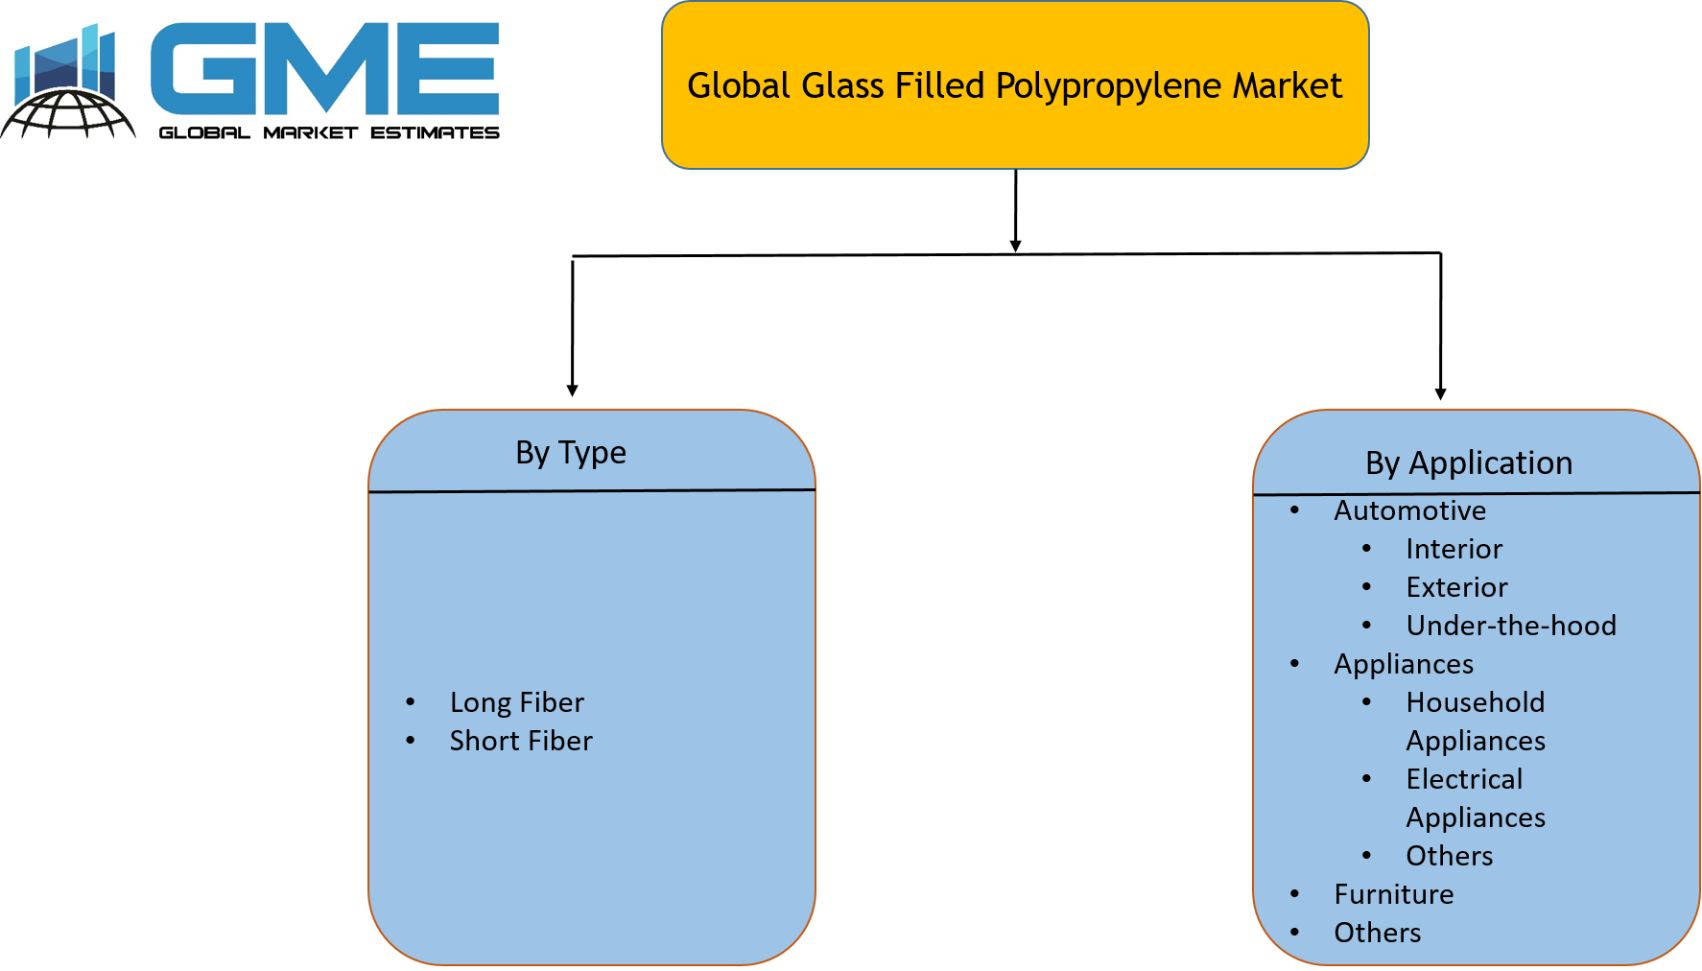 Global Glass Filled Polypropylene Market Segmentation